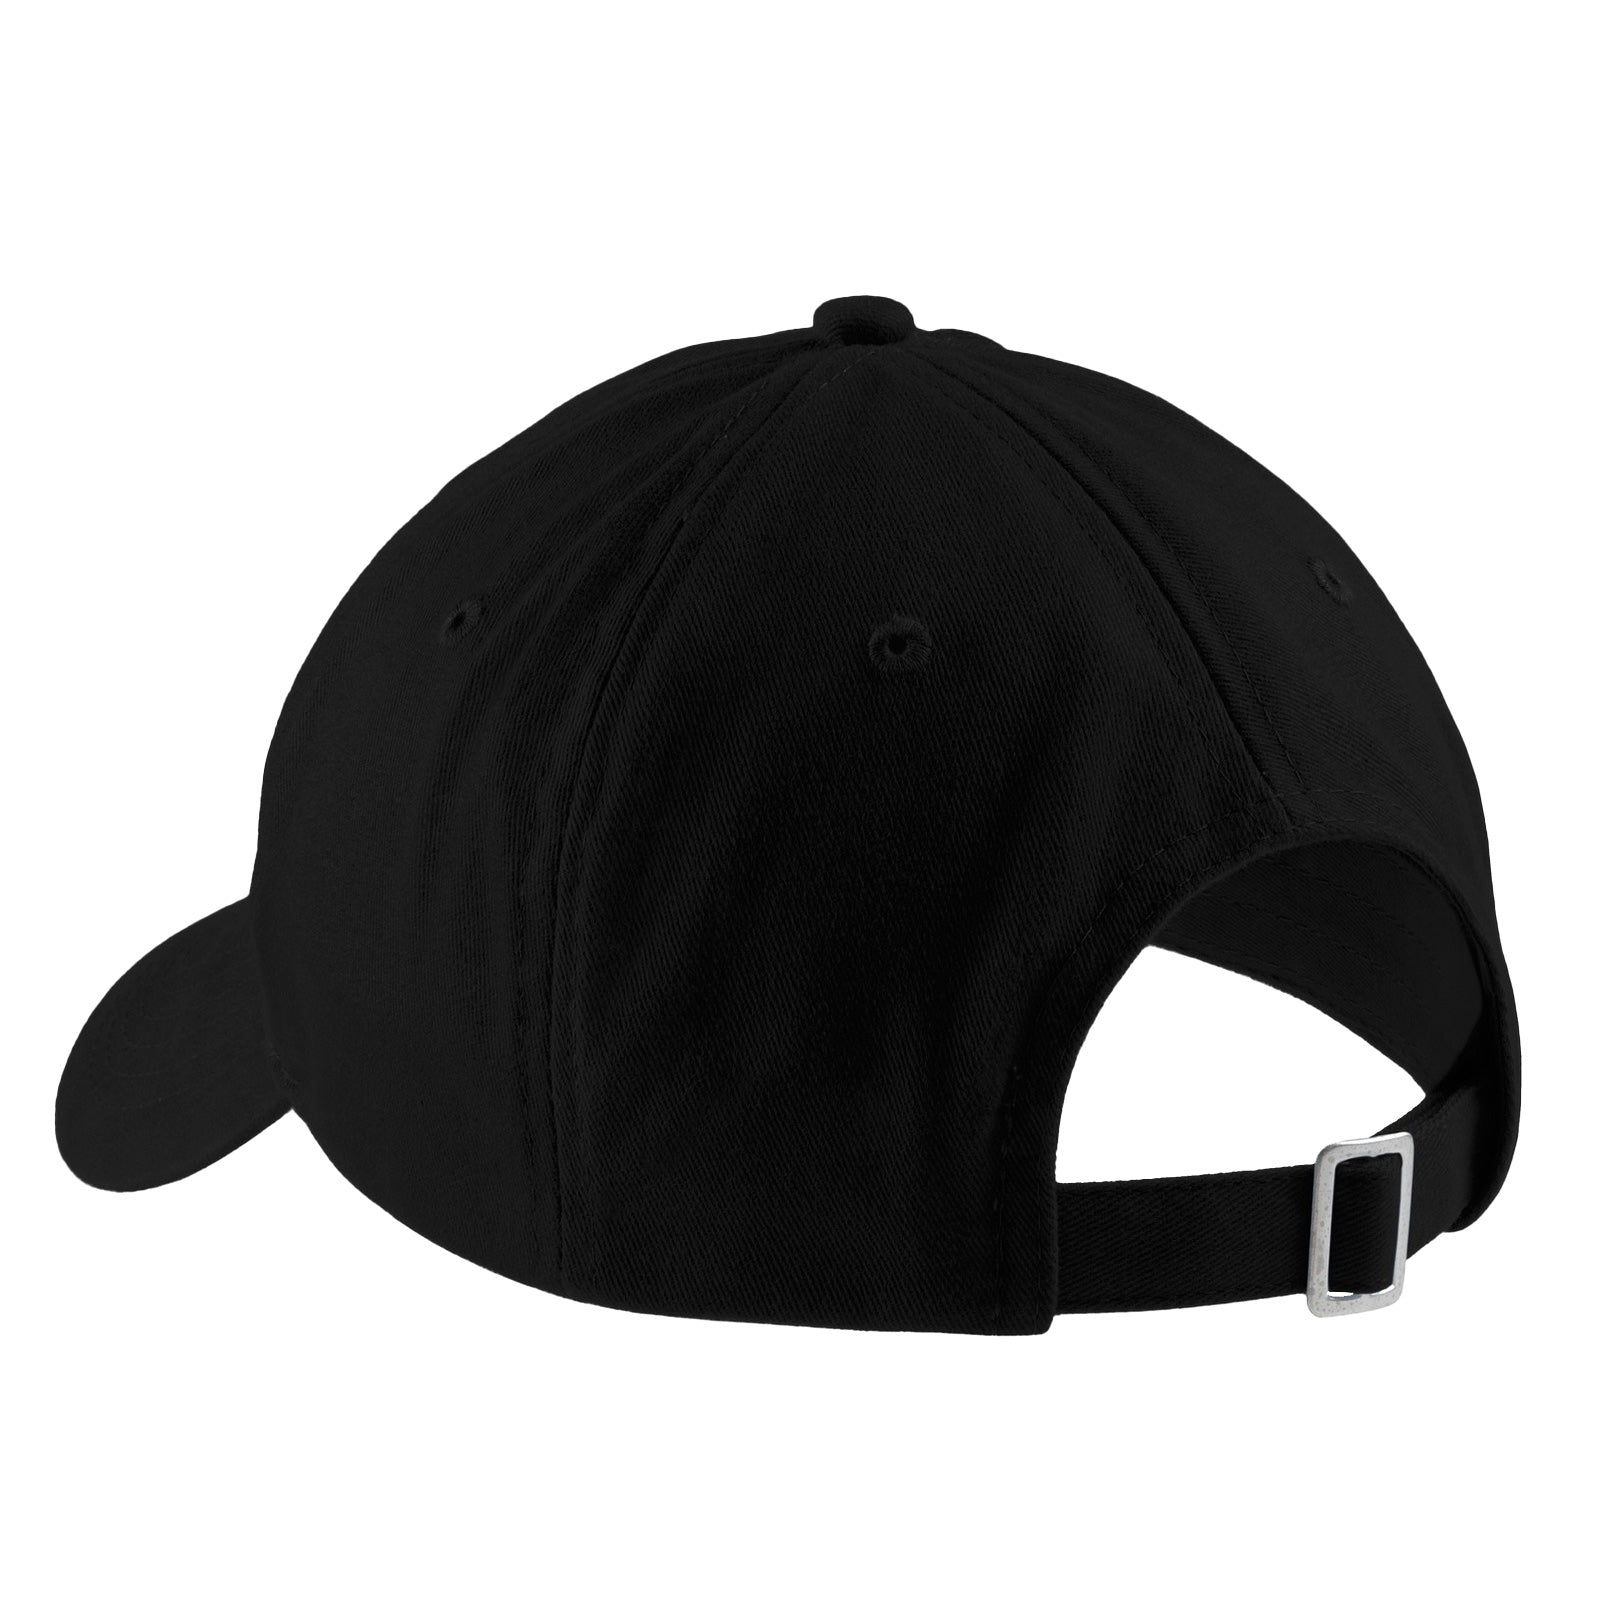 Back of a black dog custom dad hat with an adjustable strap.